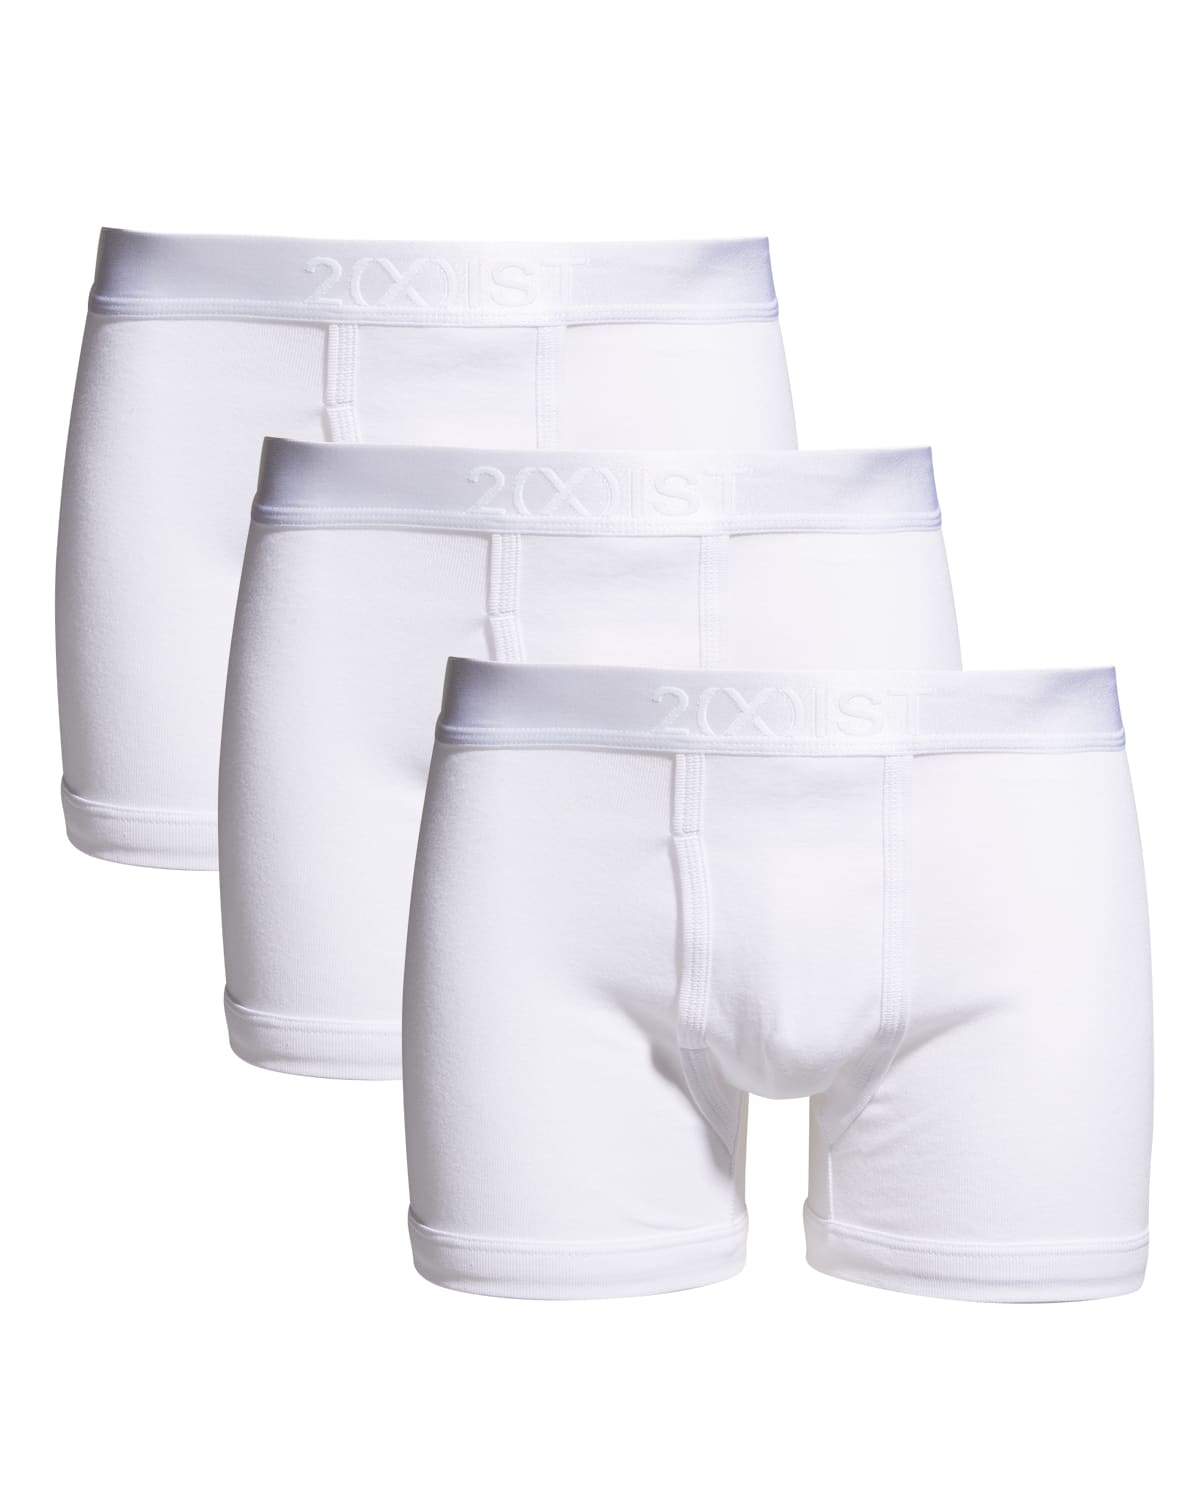 Rio Boys 7 Pack Soft Breathable Cotton Briefs Underwear sizes 4 6 Multi Colour 